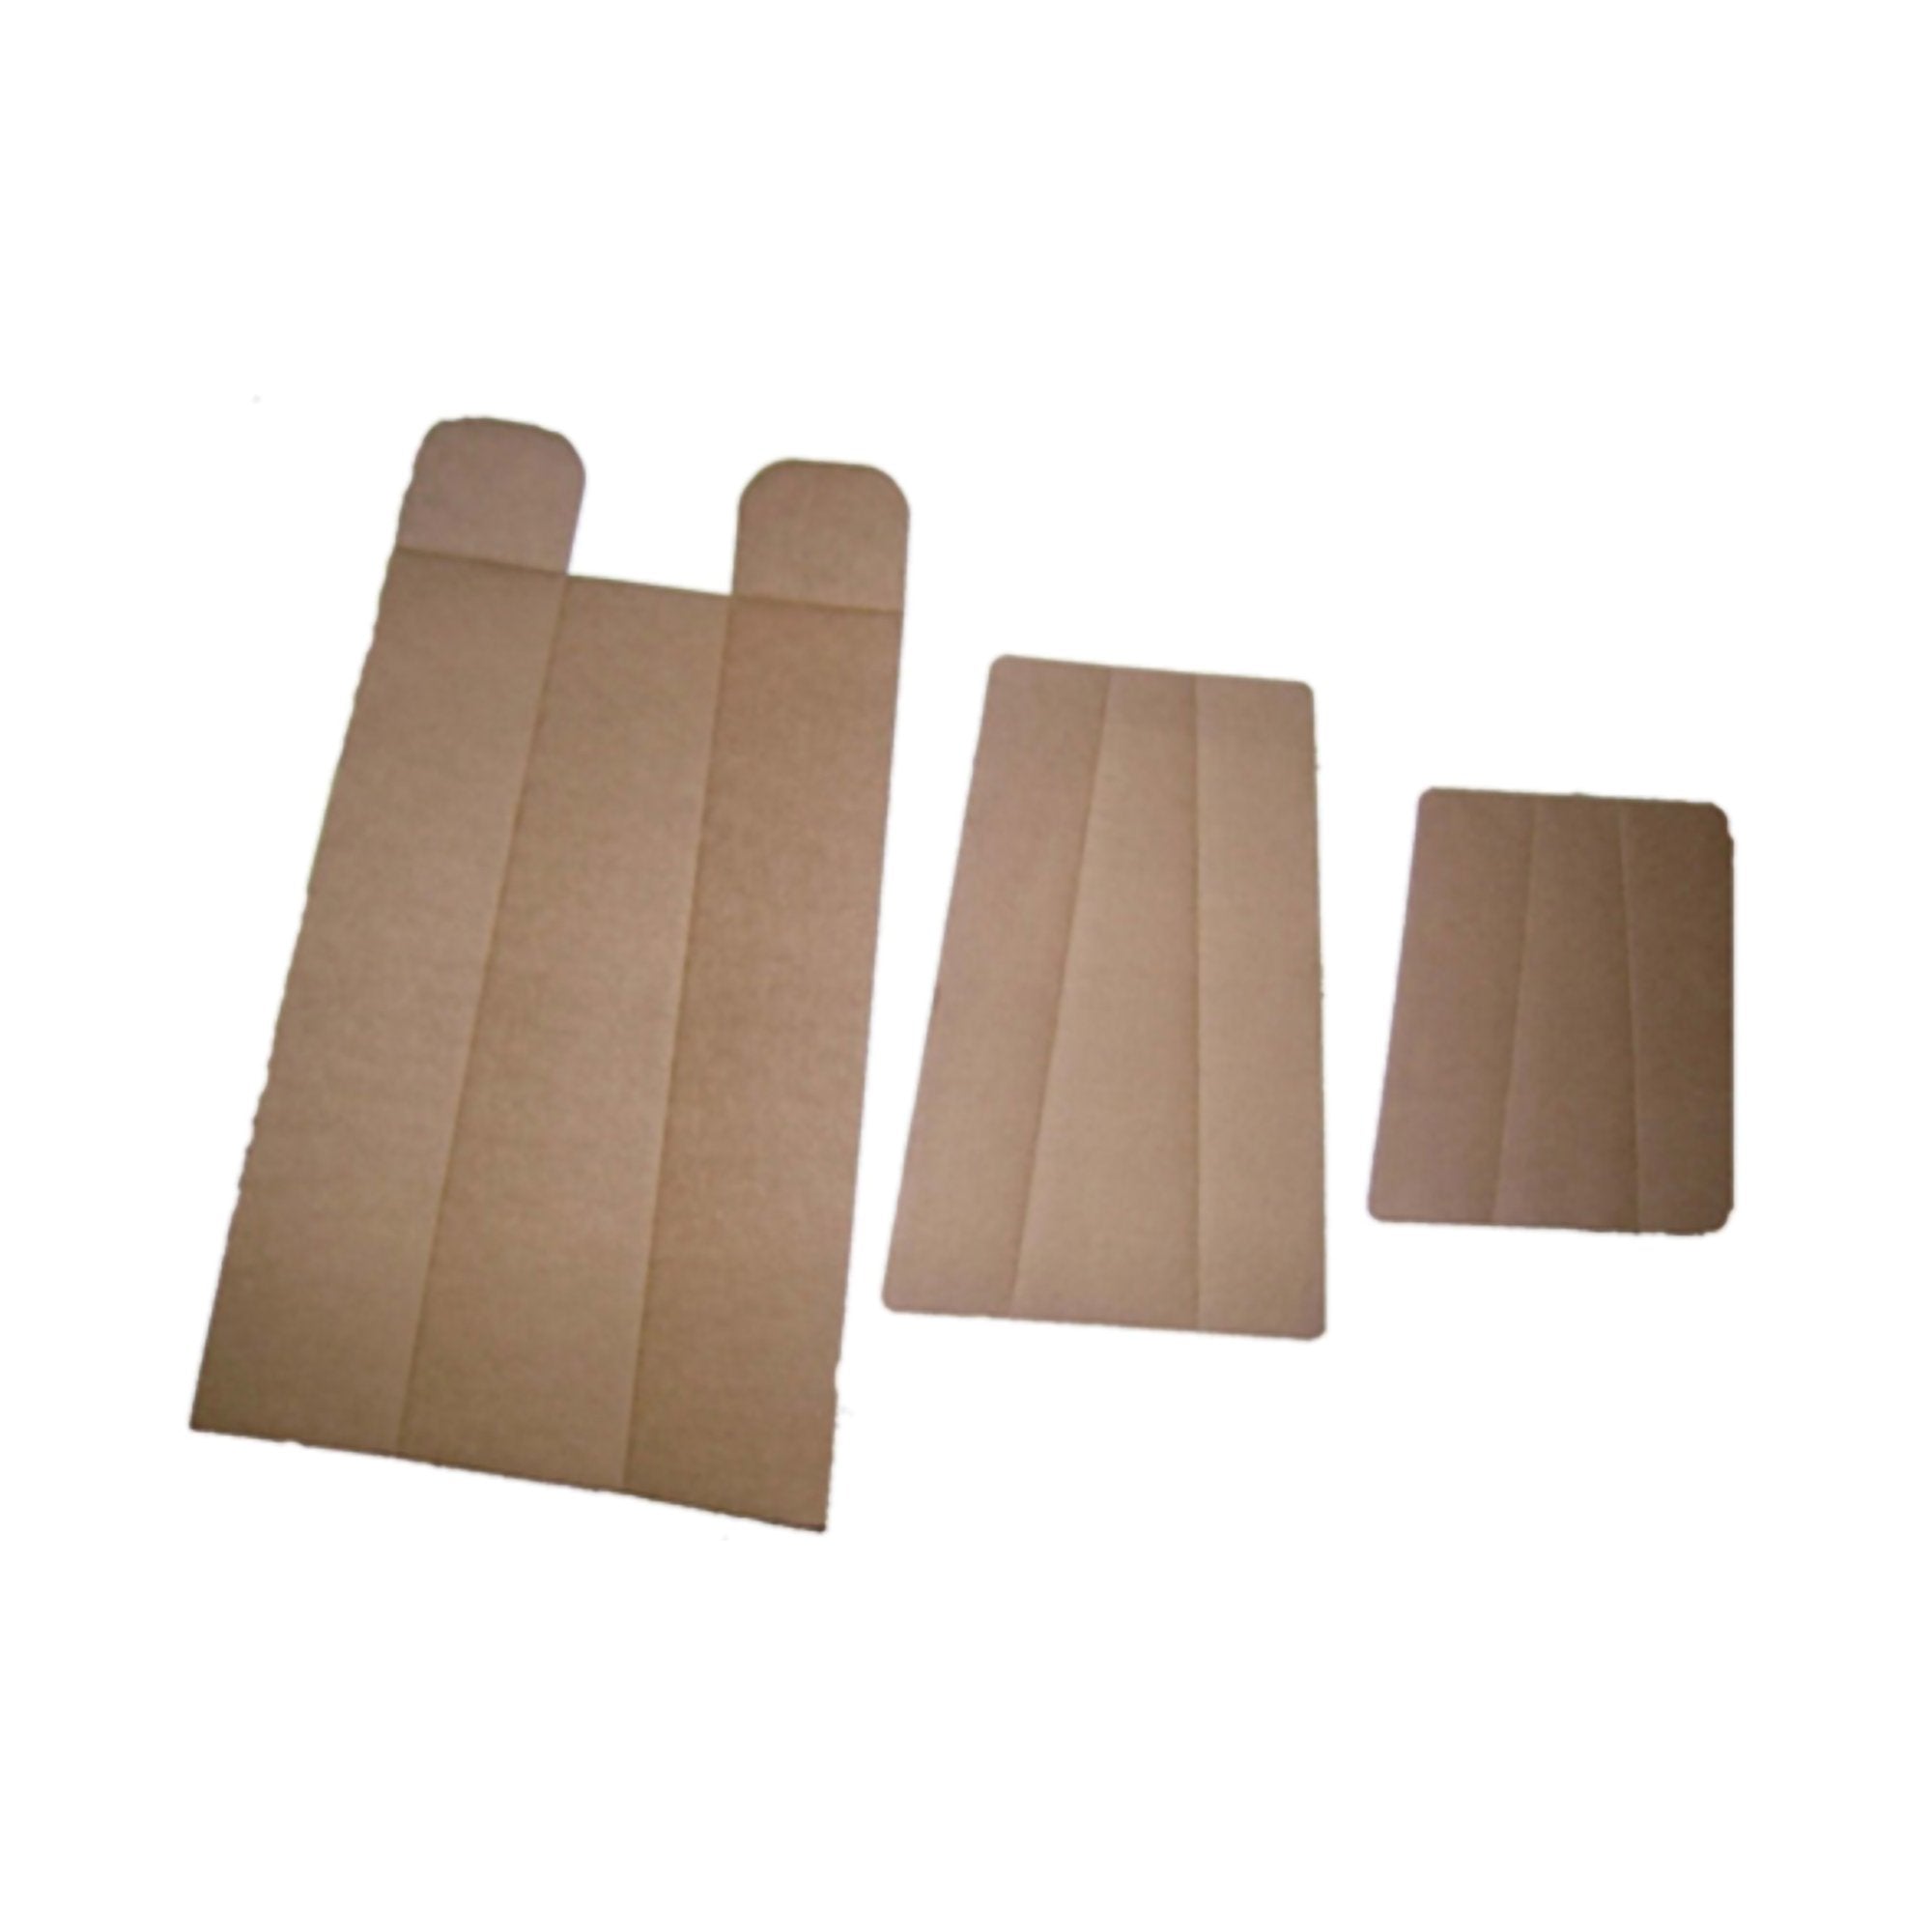 McKesson General Purpose Splint Folding Splint Cardboard Brown 12 Inch Length